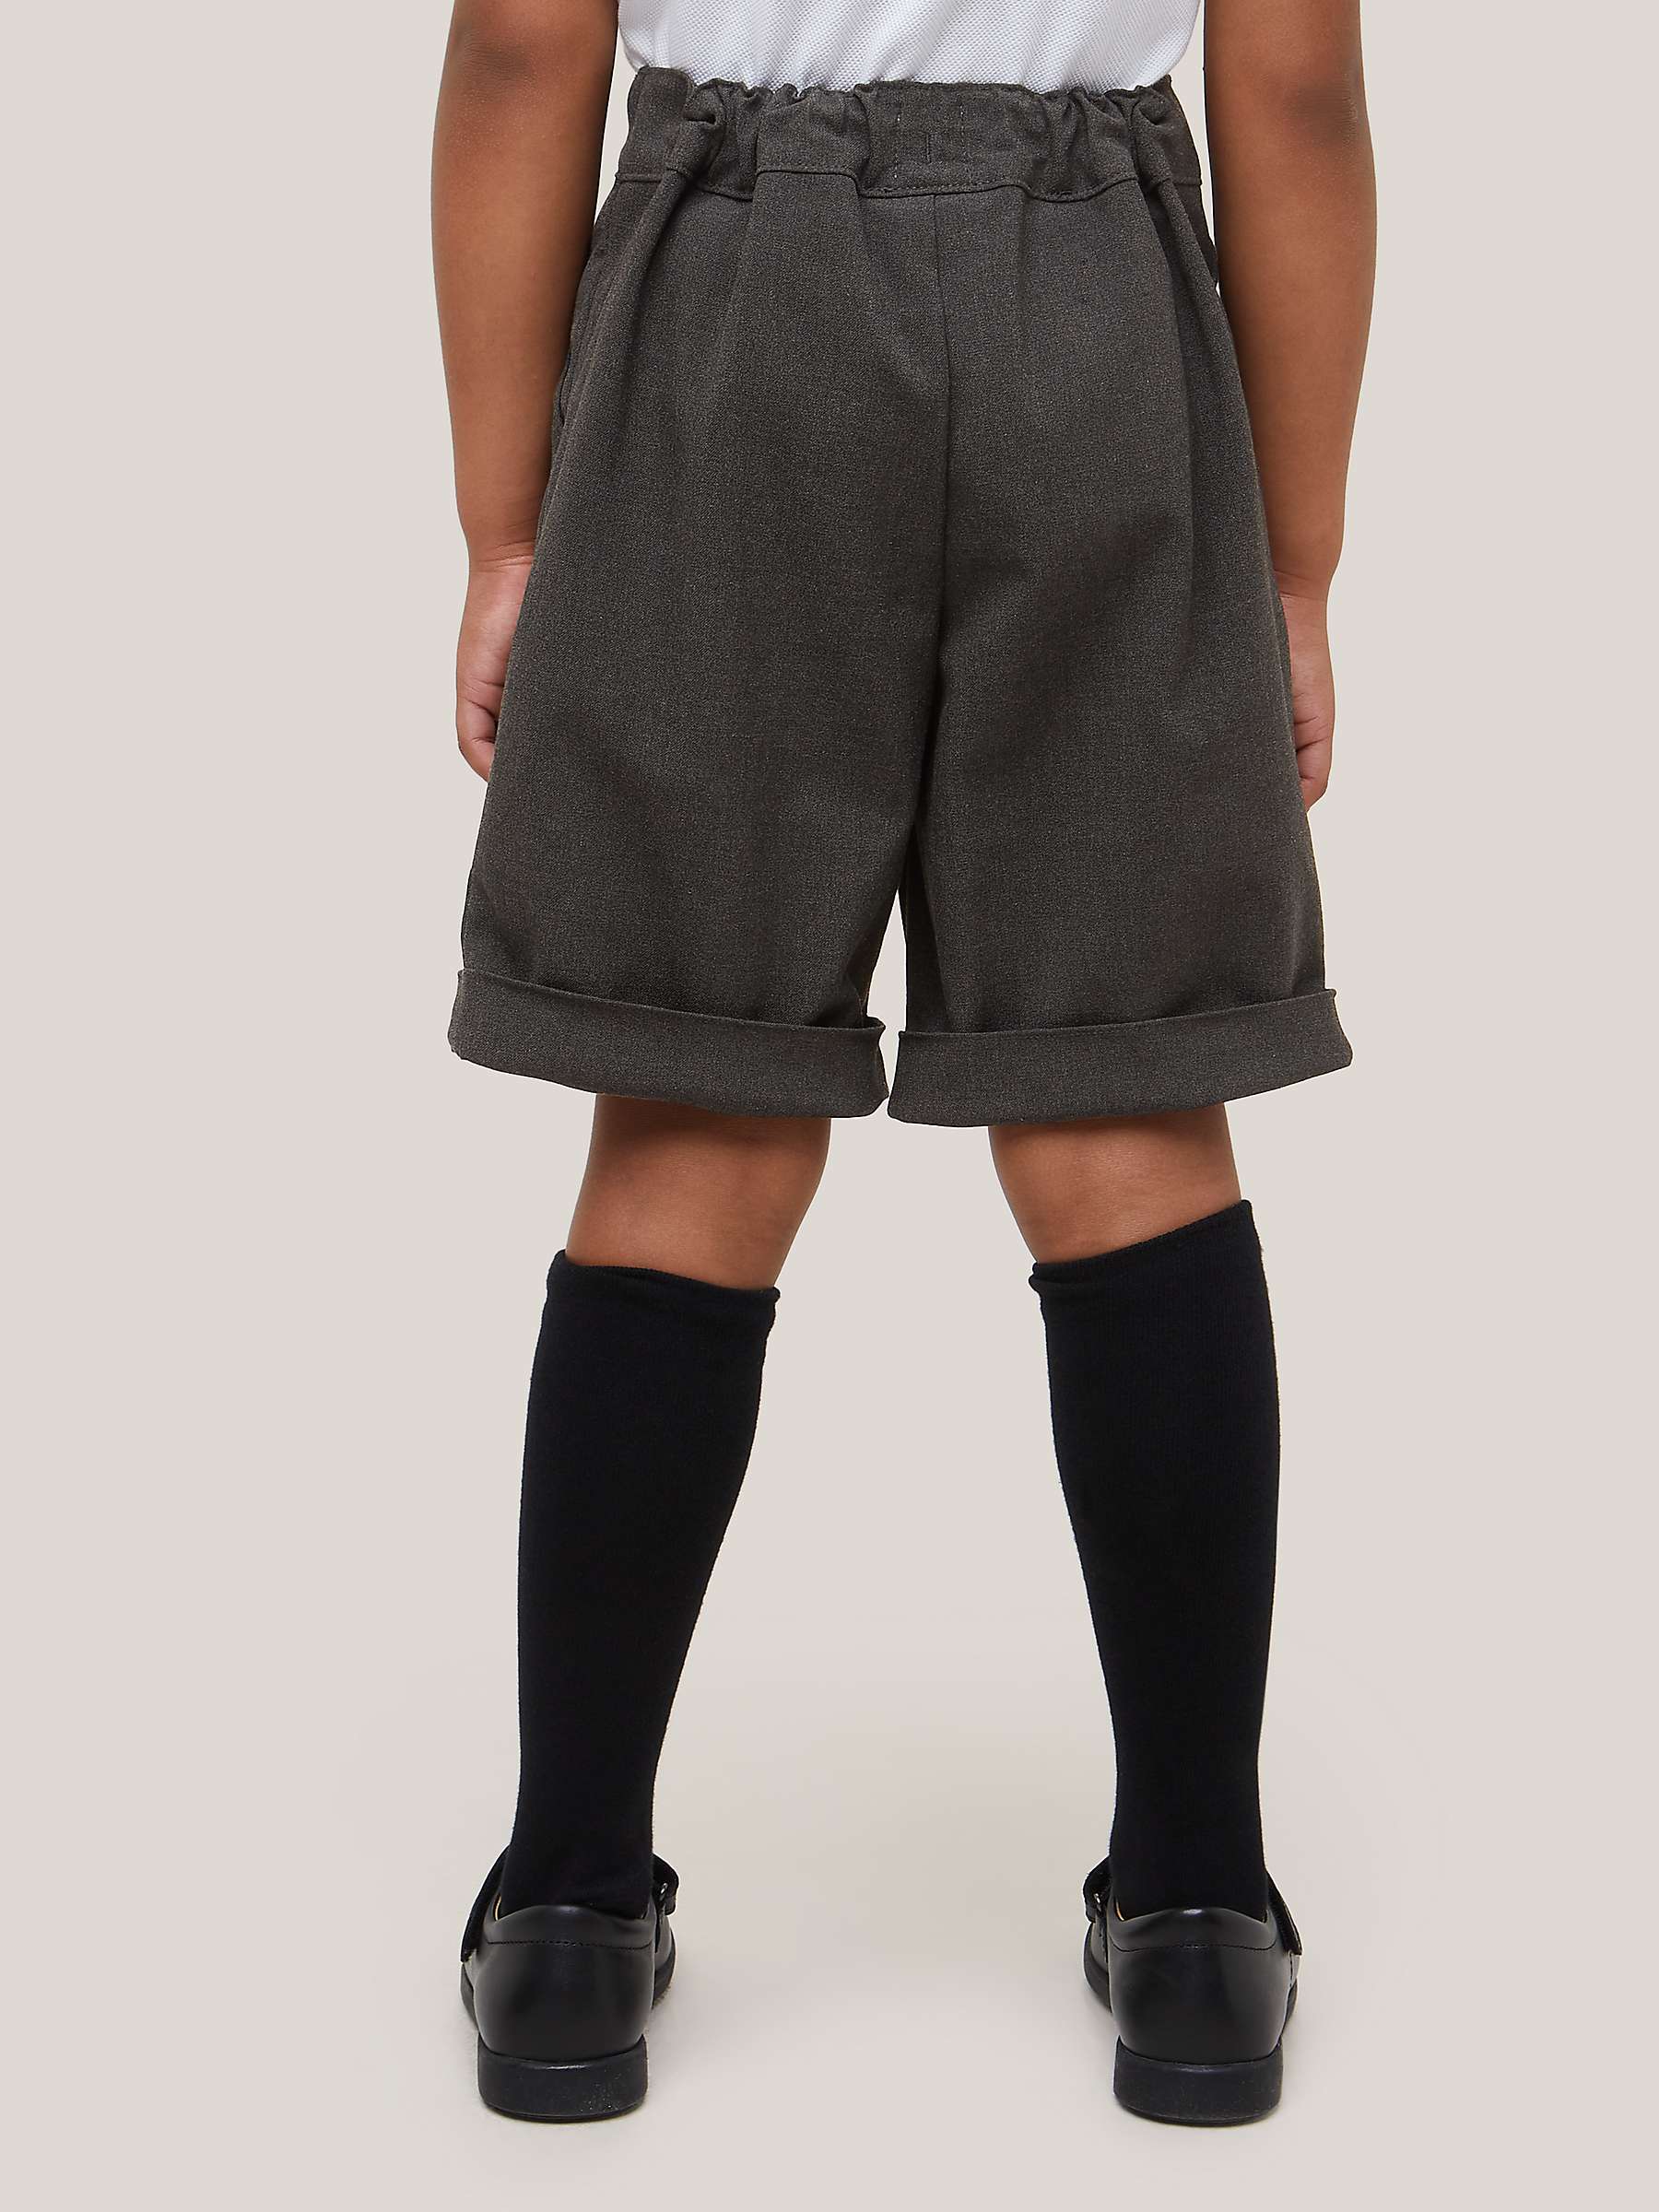 Buy John Lewis Girls' Adjustable Waist City School Shorts Online at johnlewis.com